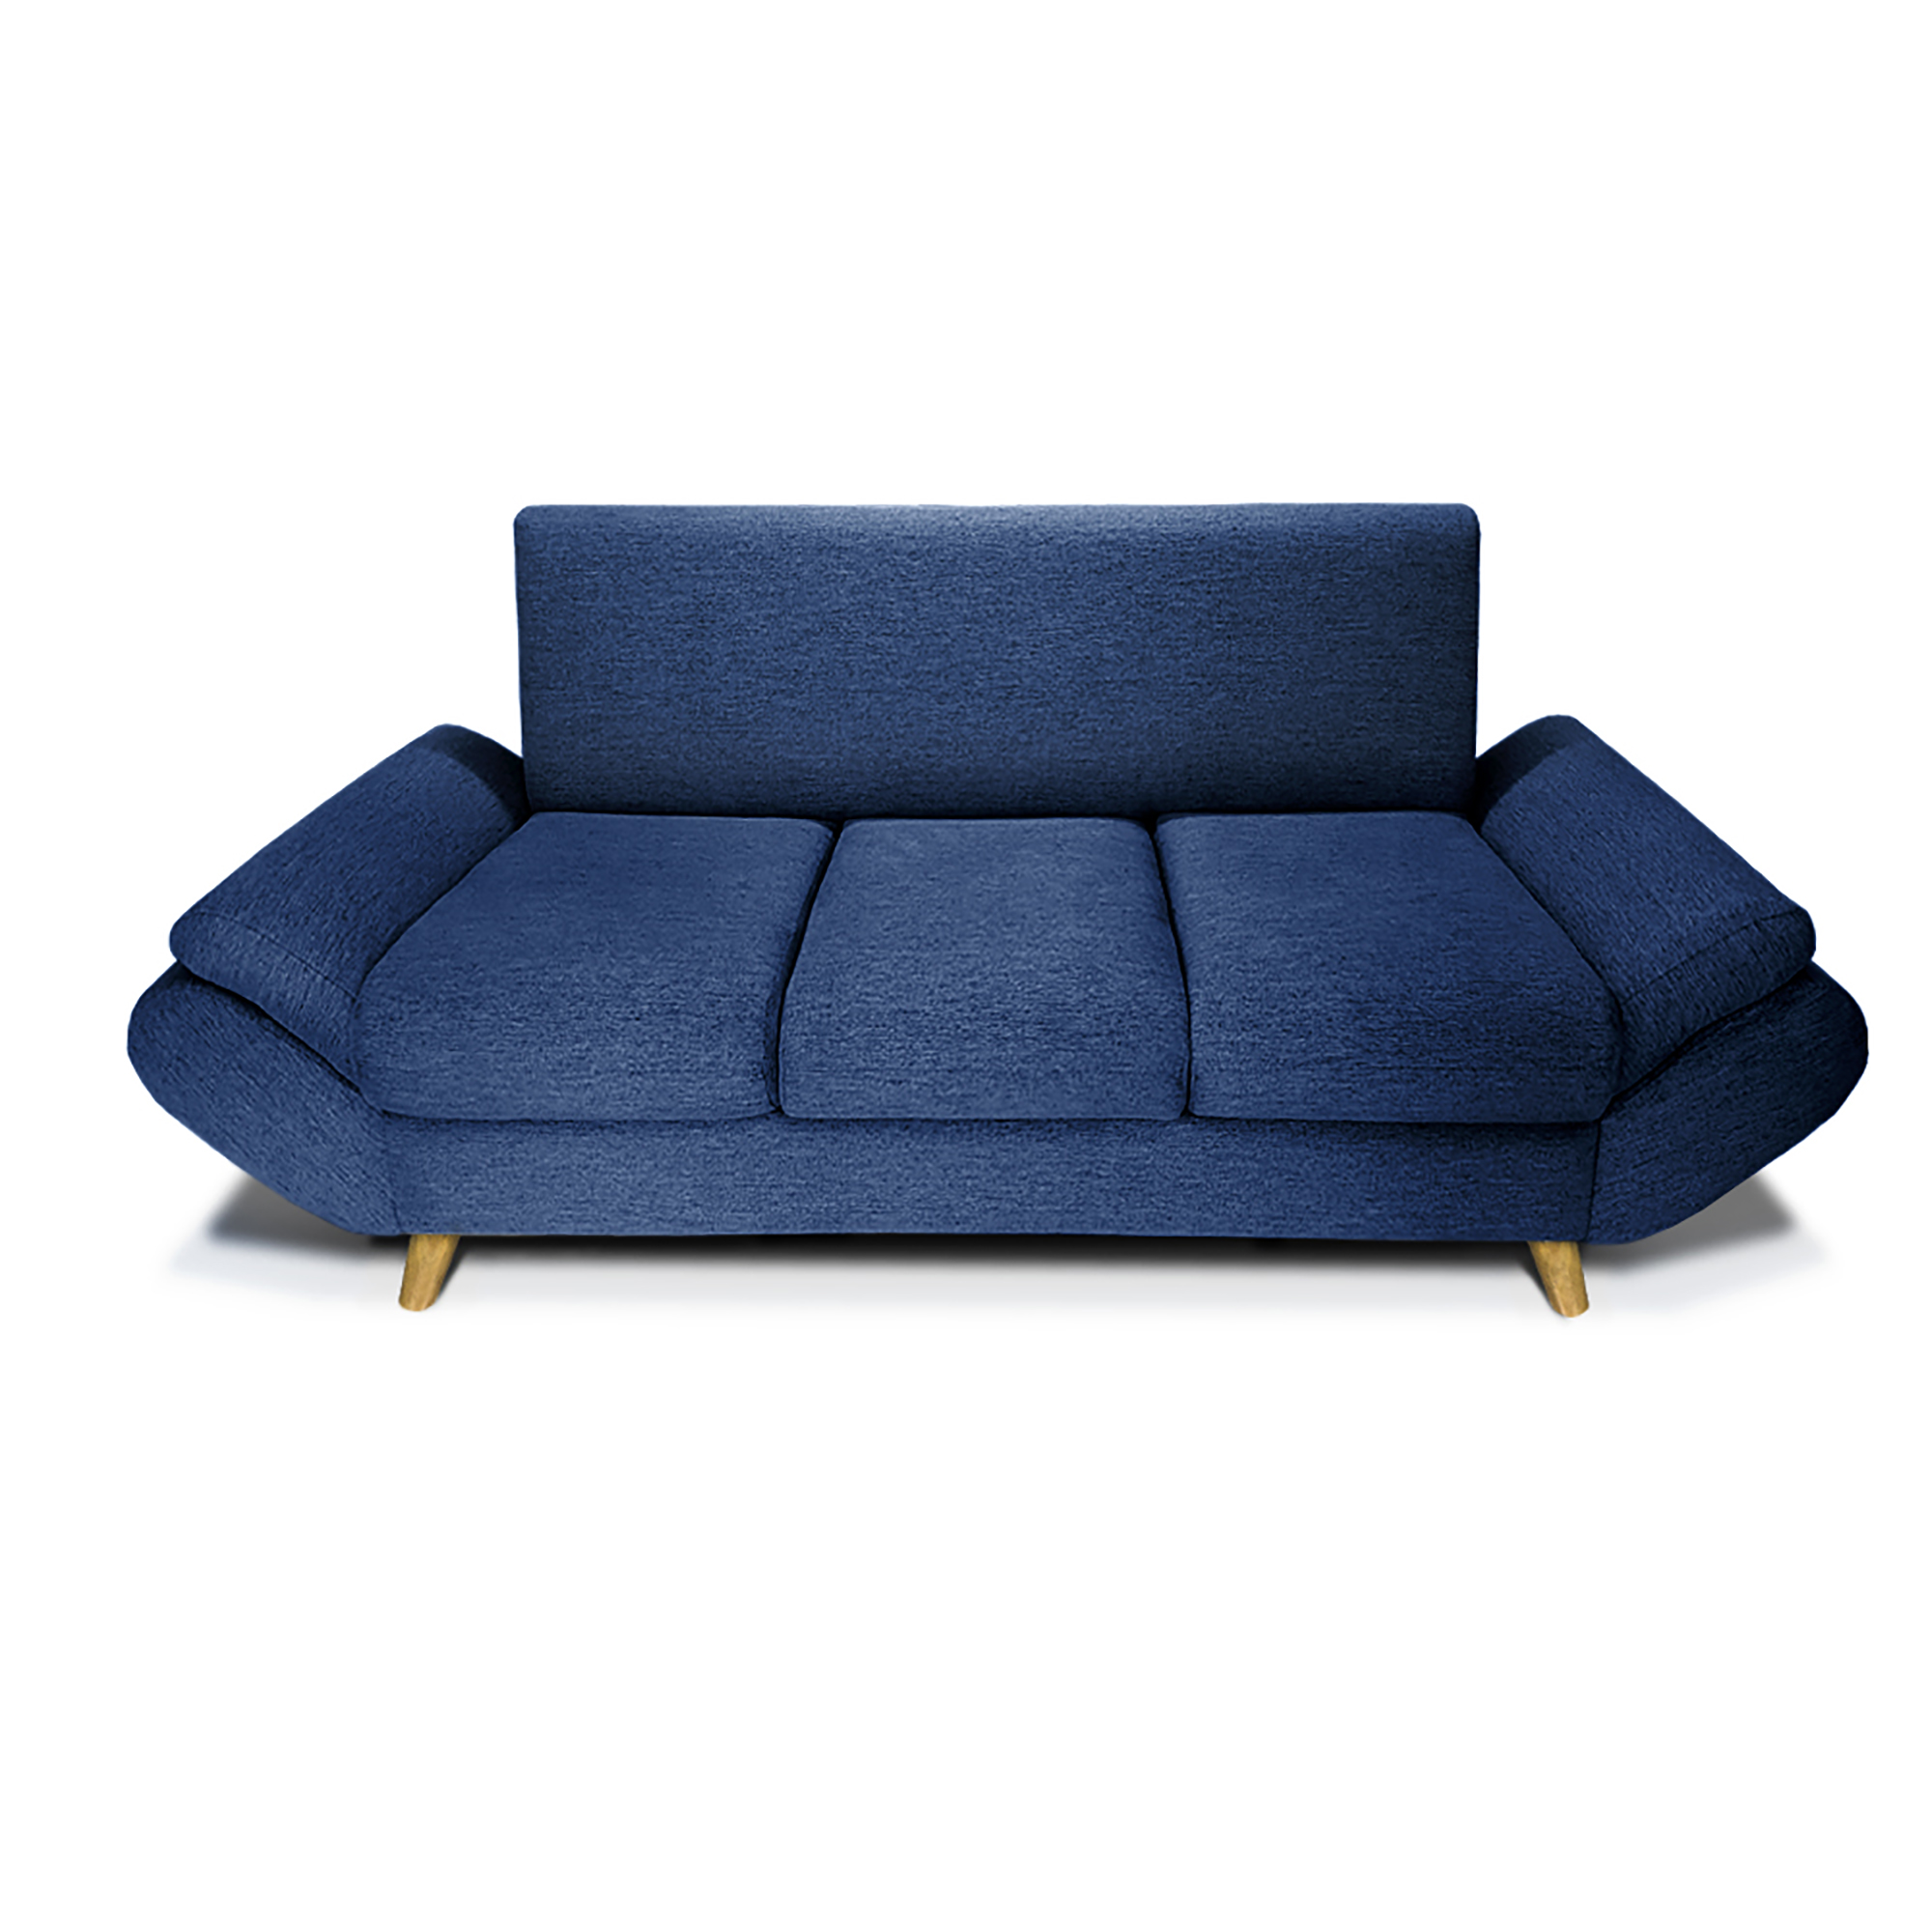 Sofa Roma 3 Puestos Color Azul Turqui